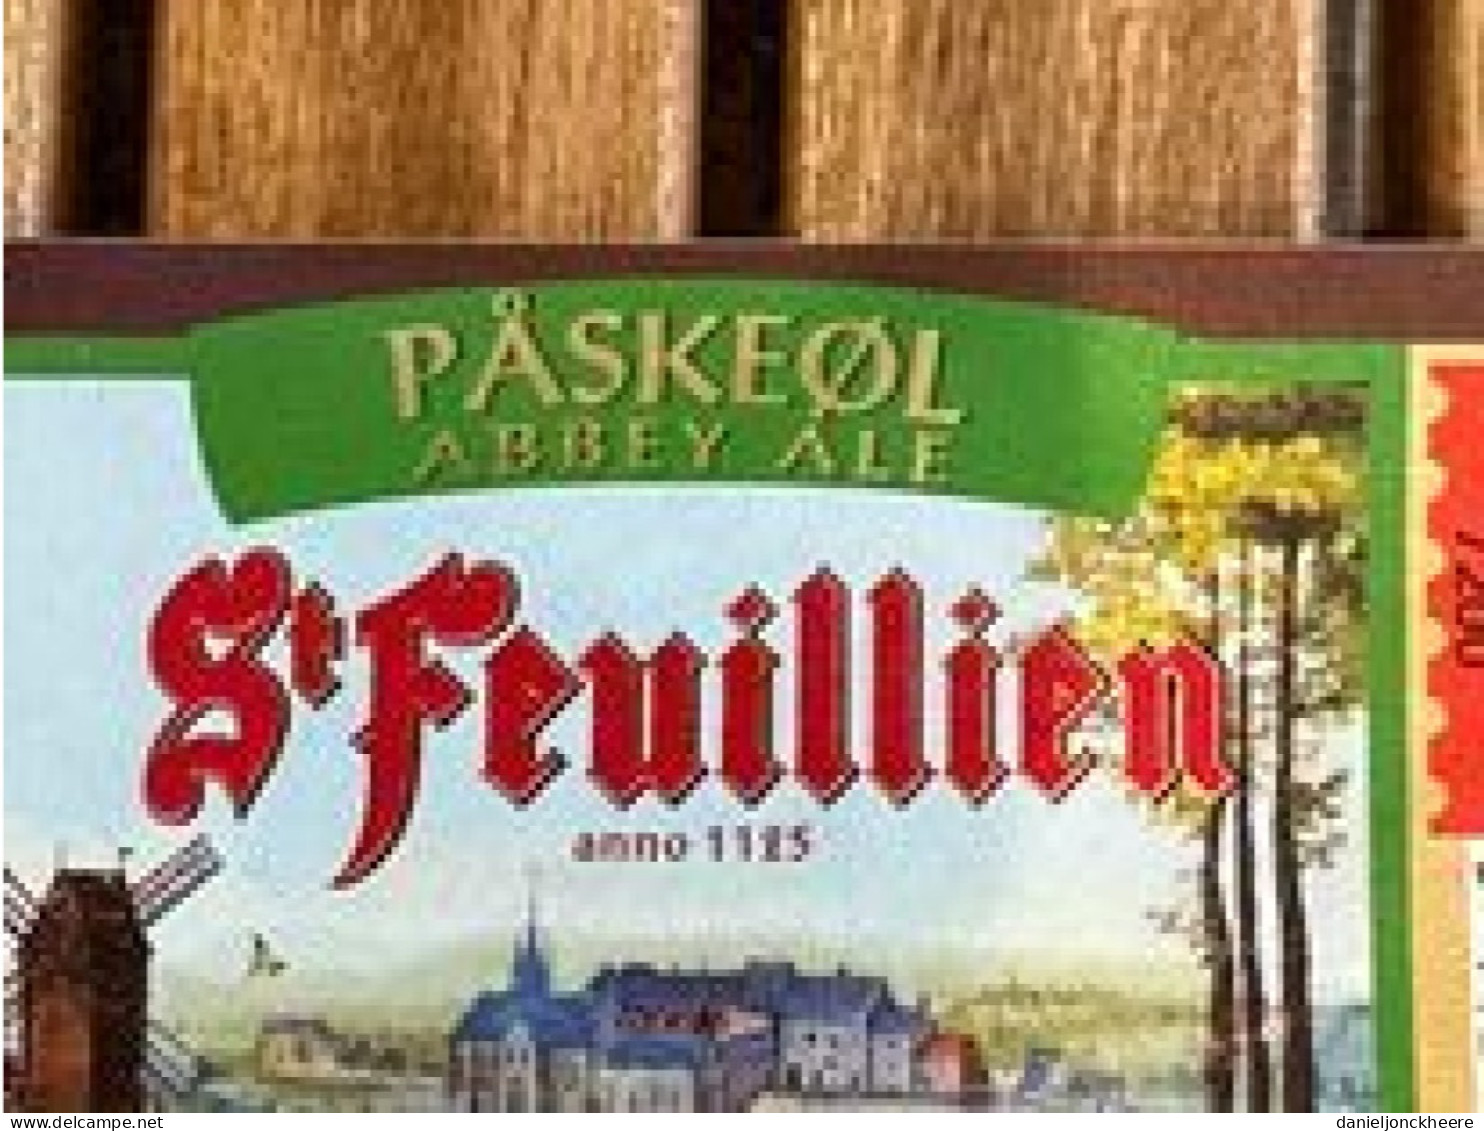 St Feuillien Paskeol Label Etiket Abbey Ale Belgium Beer - Alkohole & Spirituosen